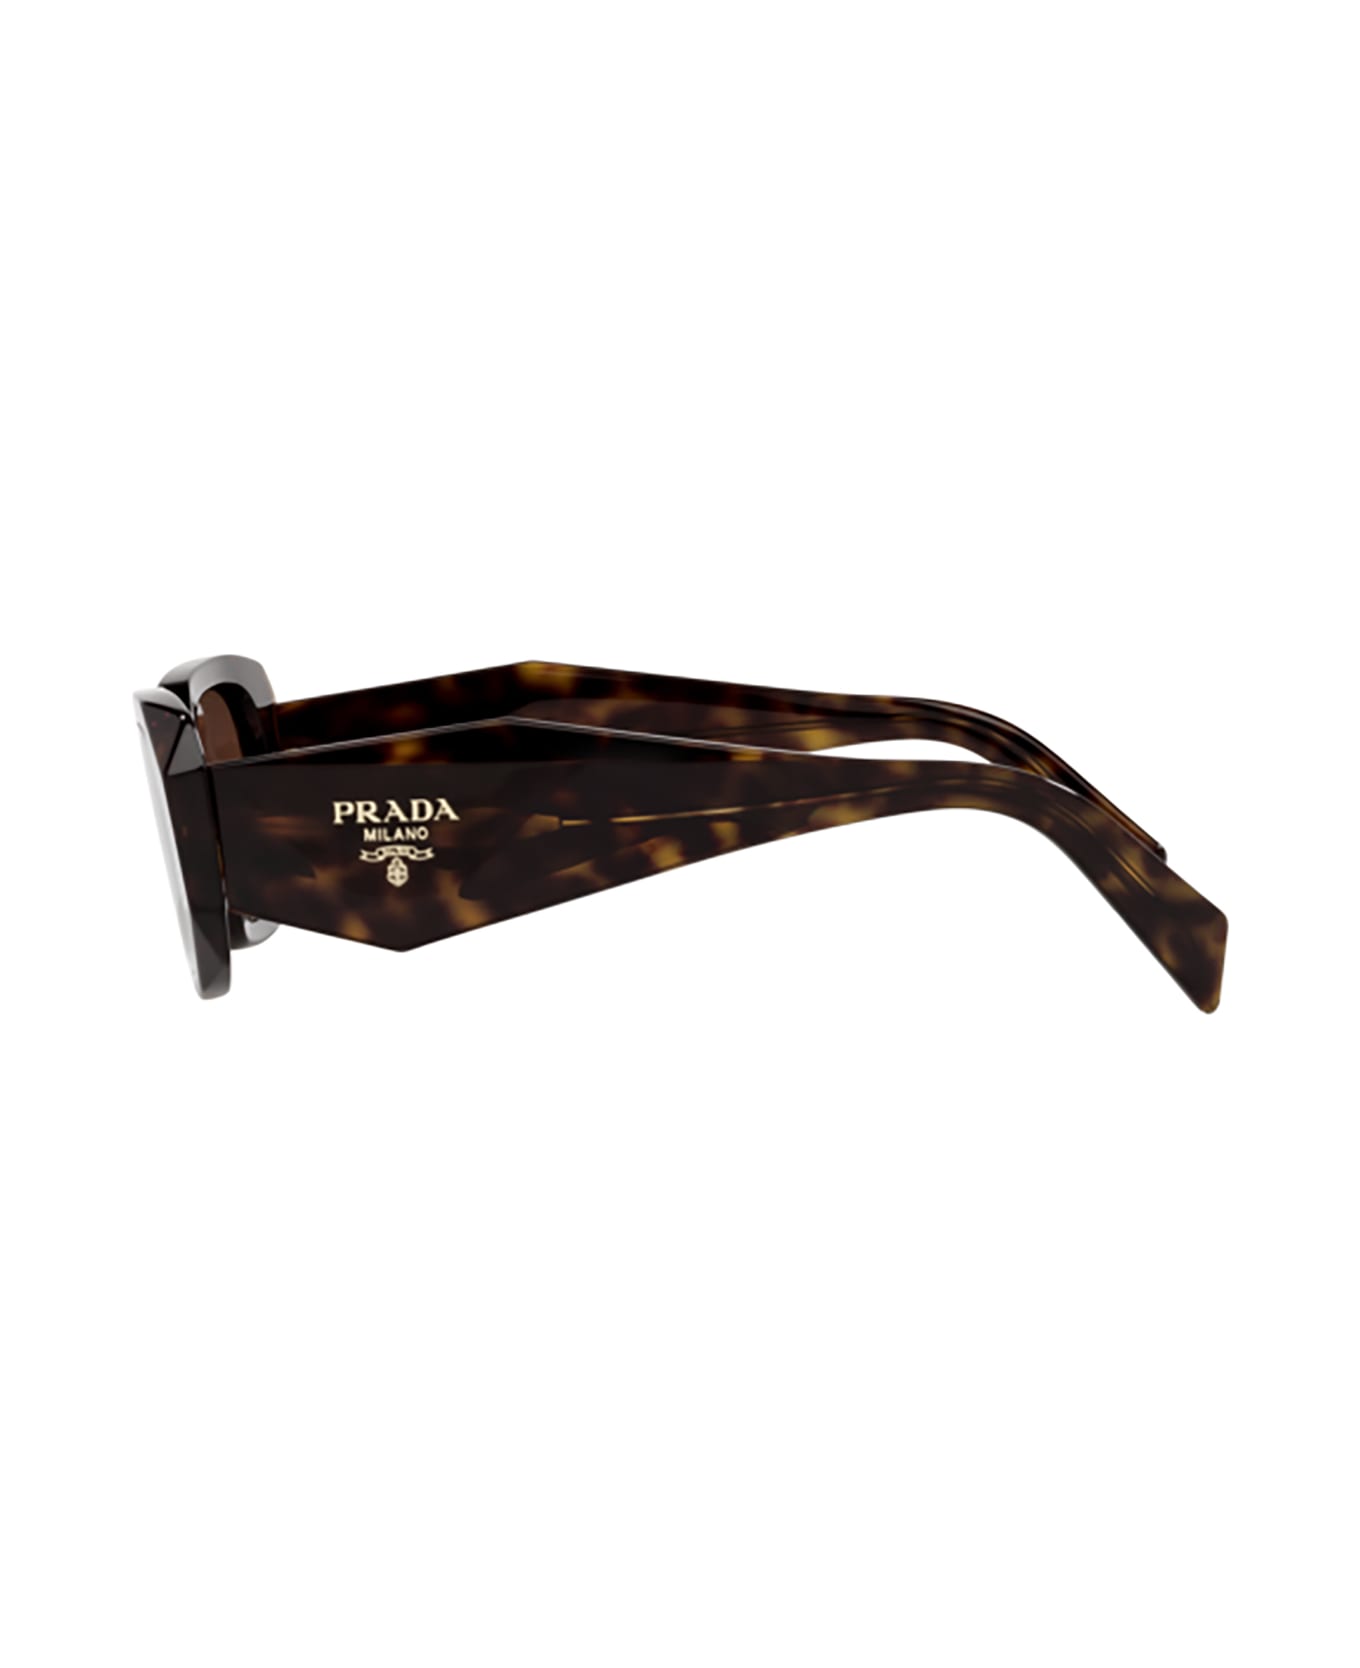 Prada Eyewear 17WS SOLE Sunglasses サングラス